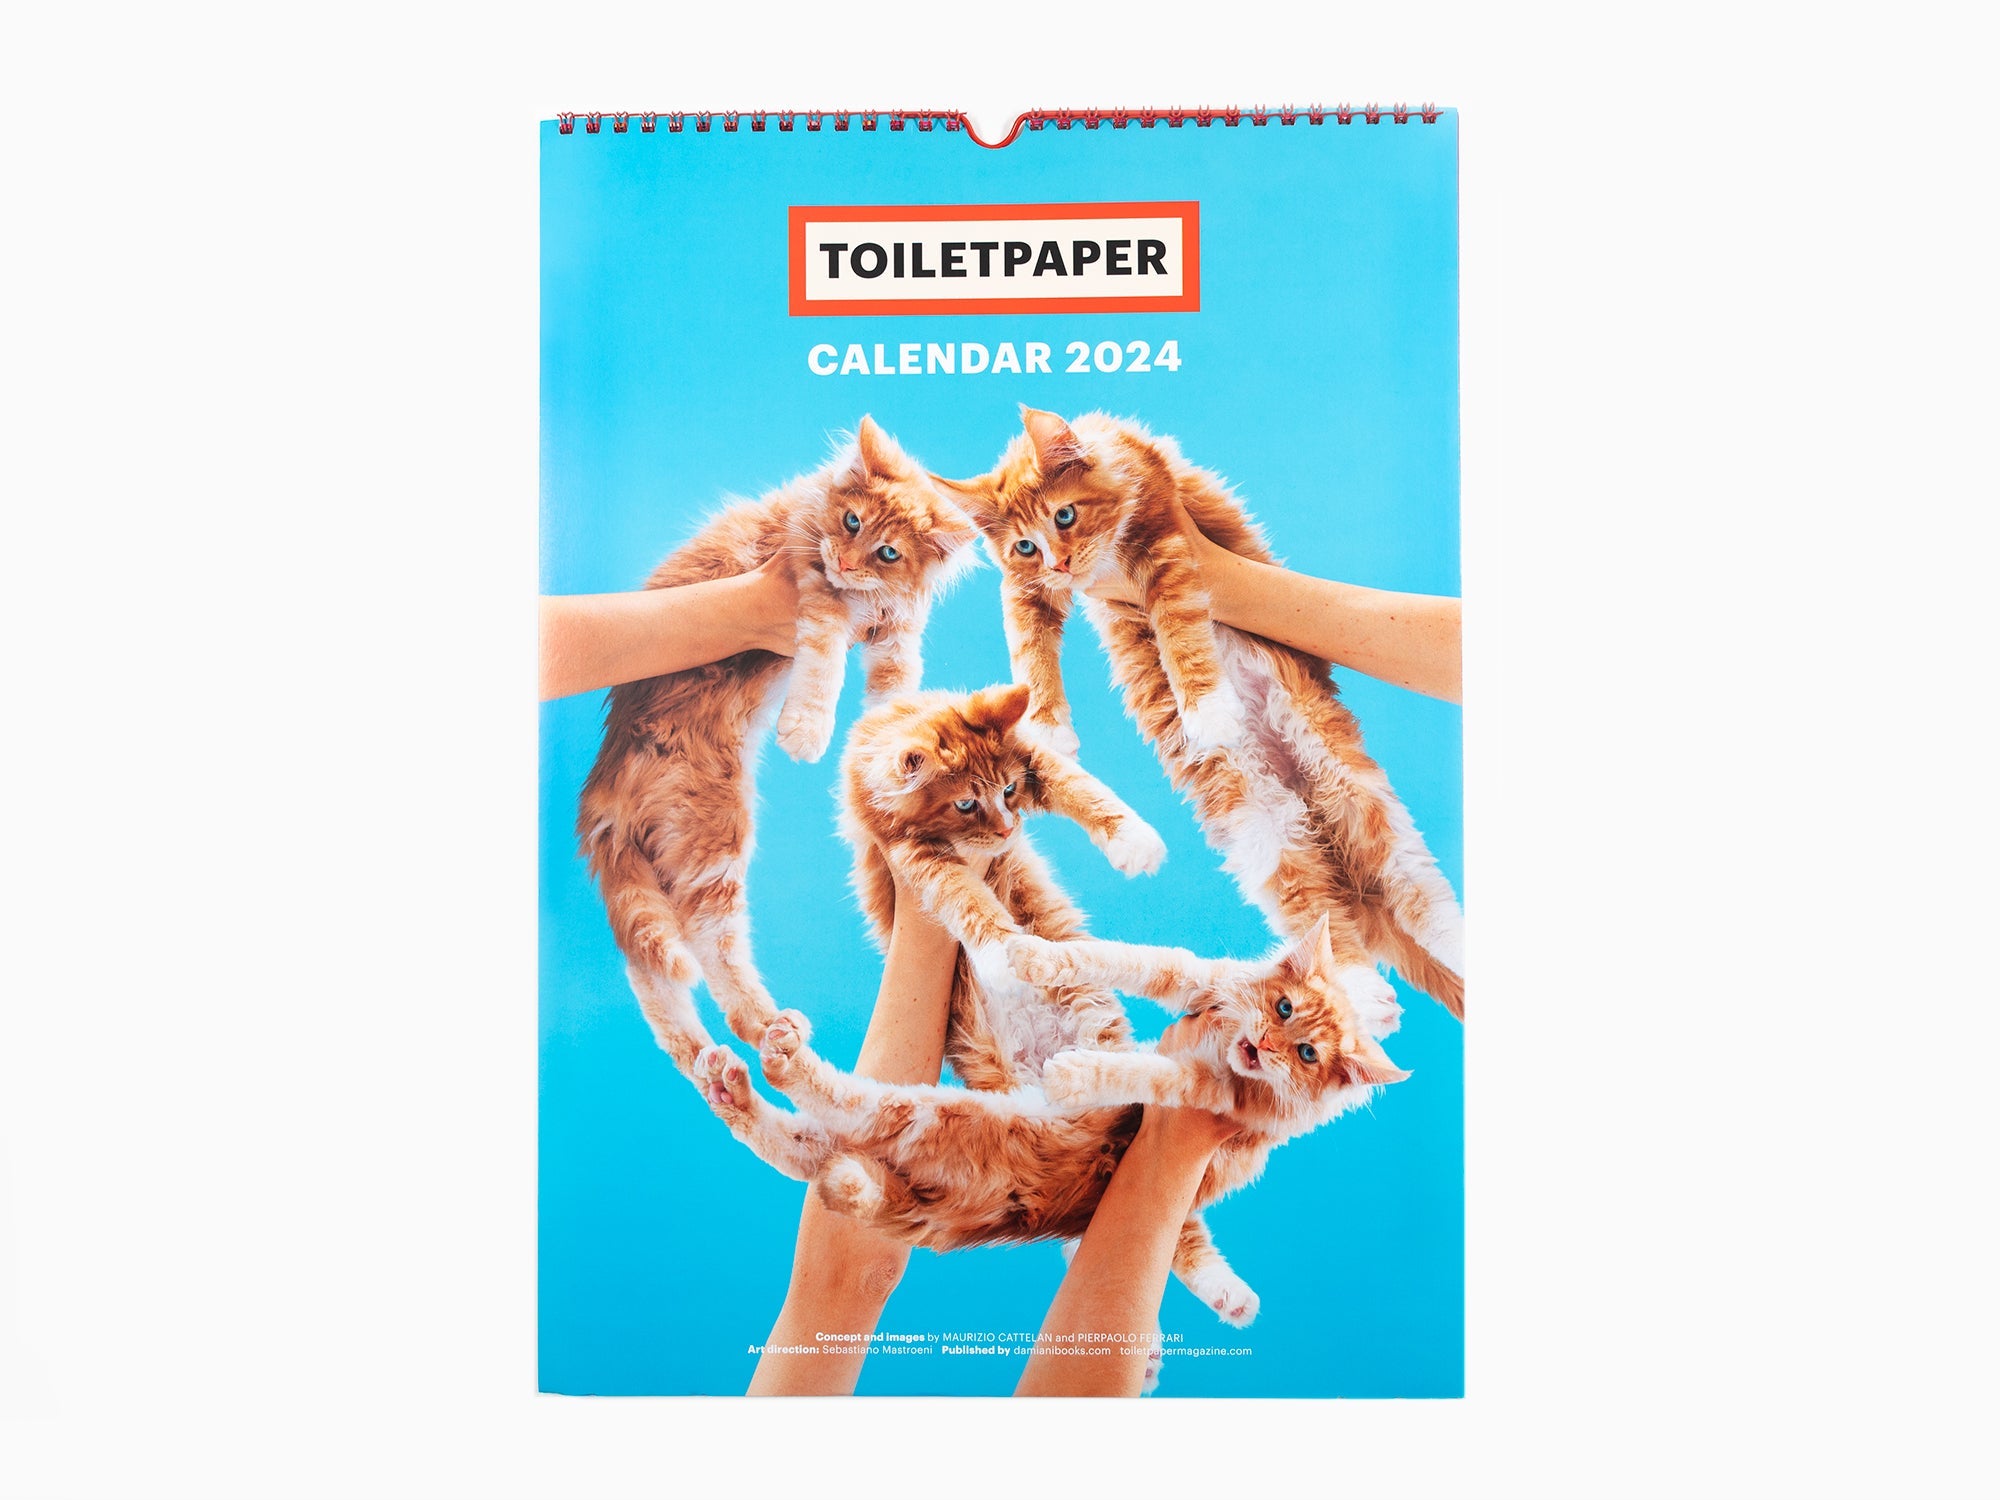 Toiletpaper - 2024 Calendar